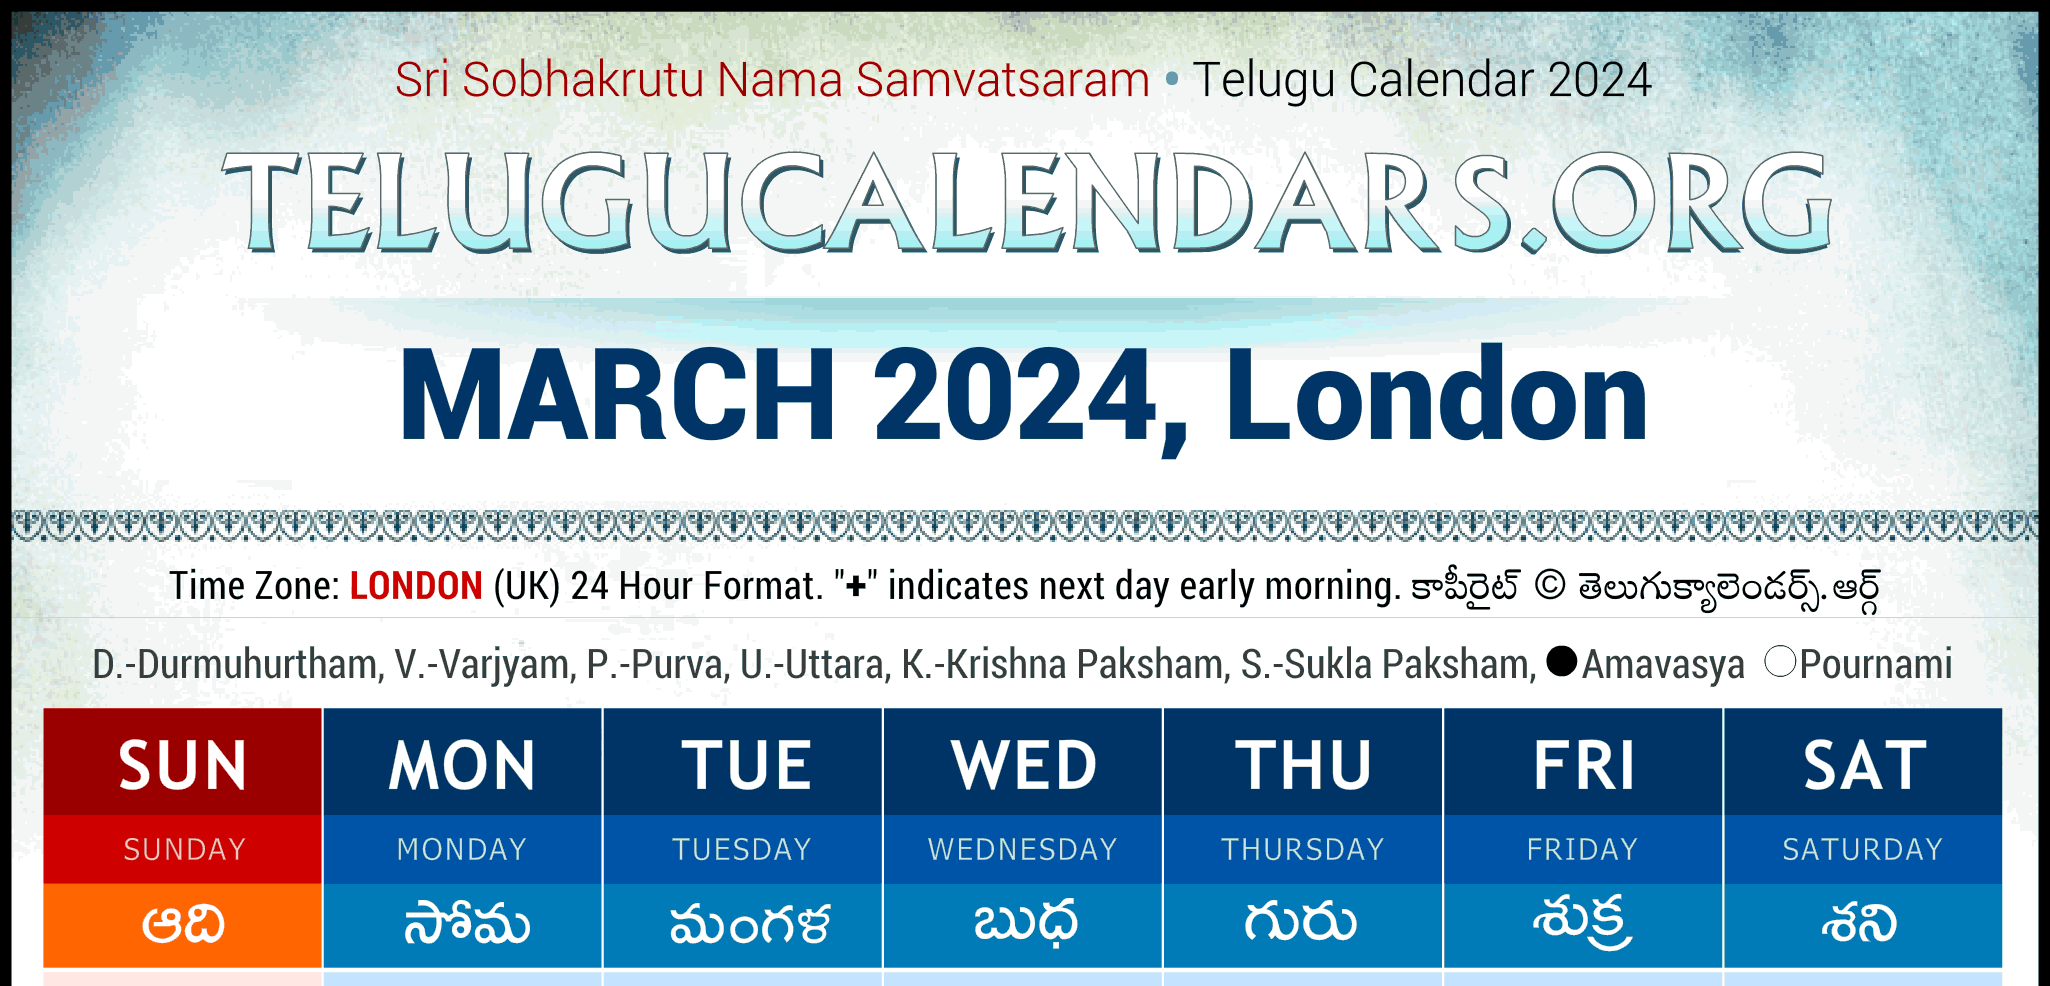 Telugu Calendar 2024 London